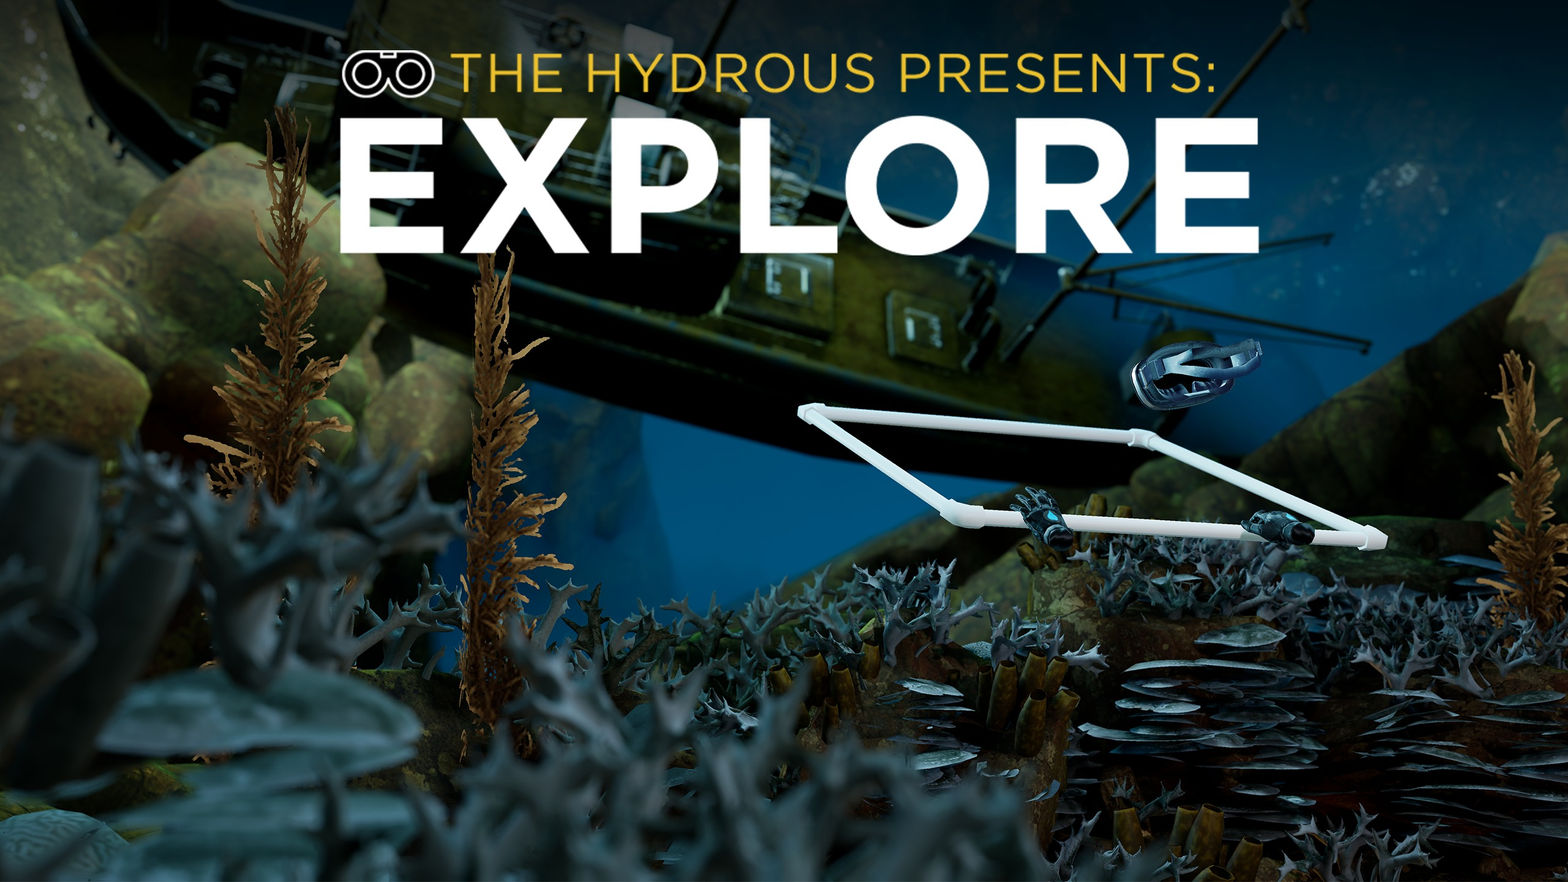 The Hydrous presents: EXPLORE